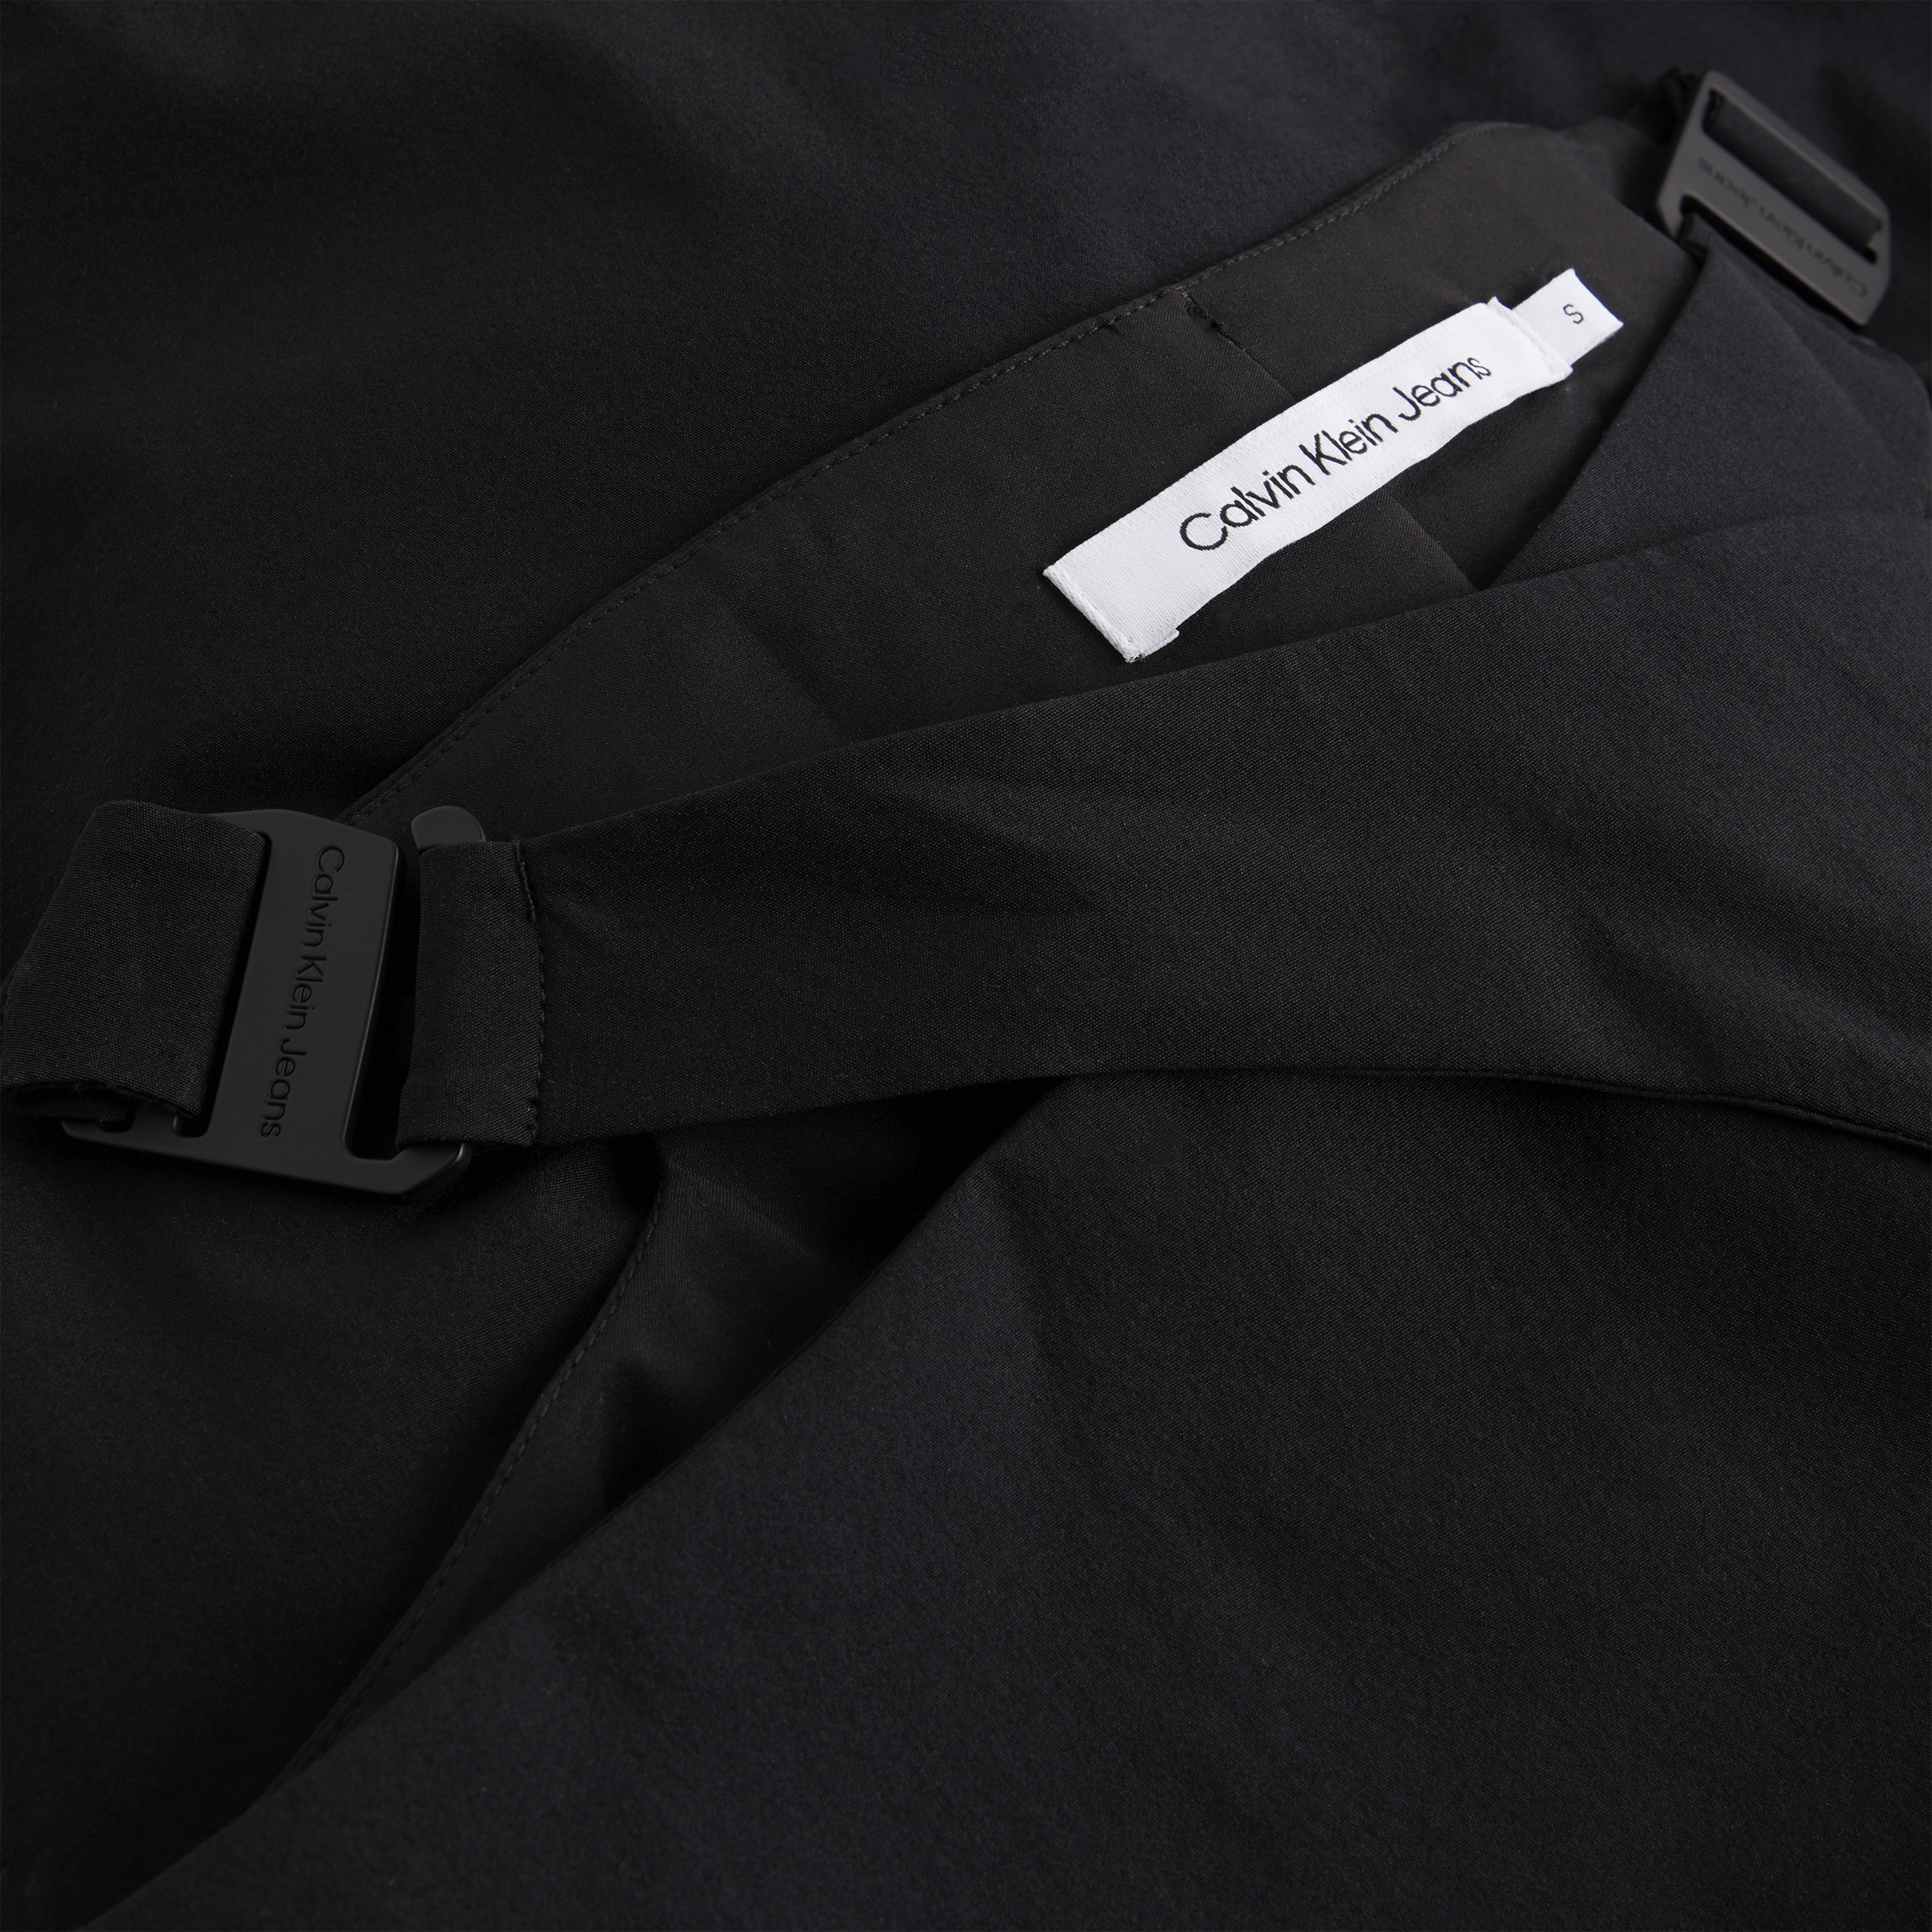 Calvin Klein Jeans - Cut Out Pants, Black, large image number 2